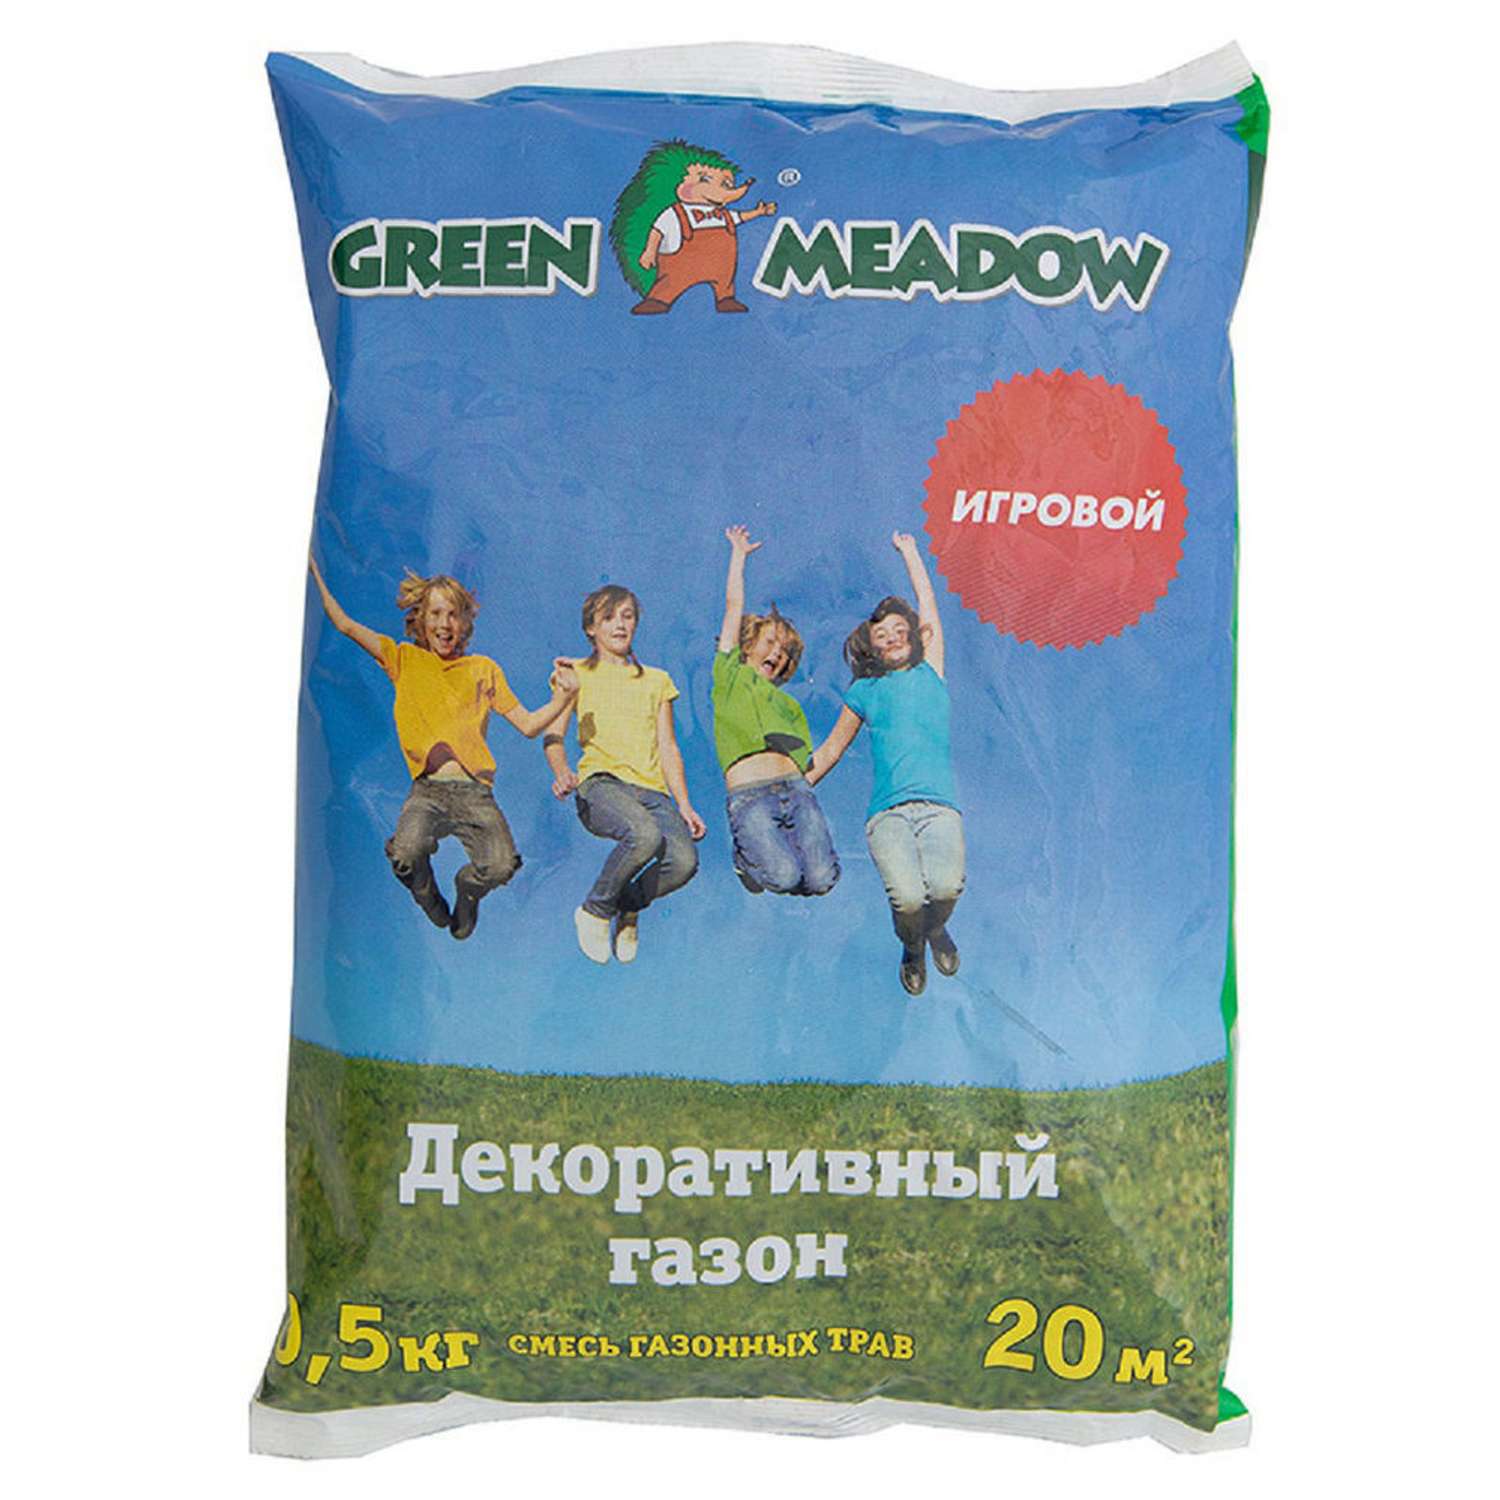 Семена трав GREEN MEADOW для игрового газона 0.5кг - фото 1